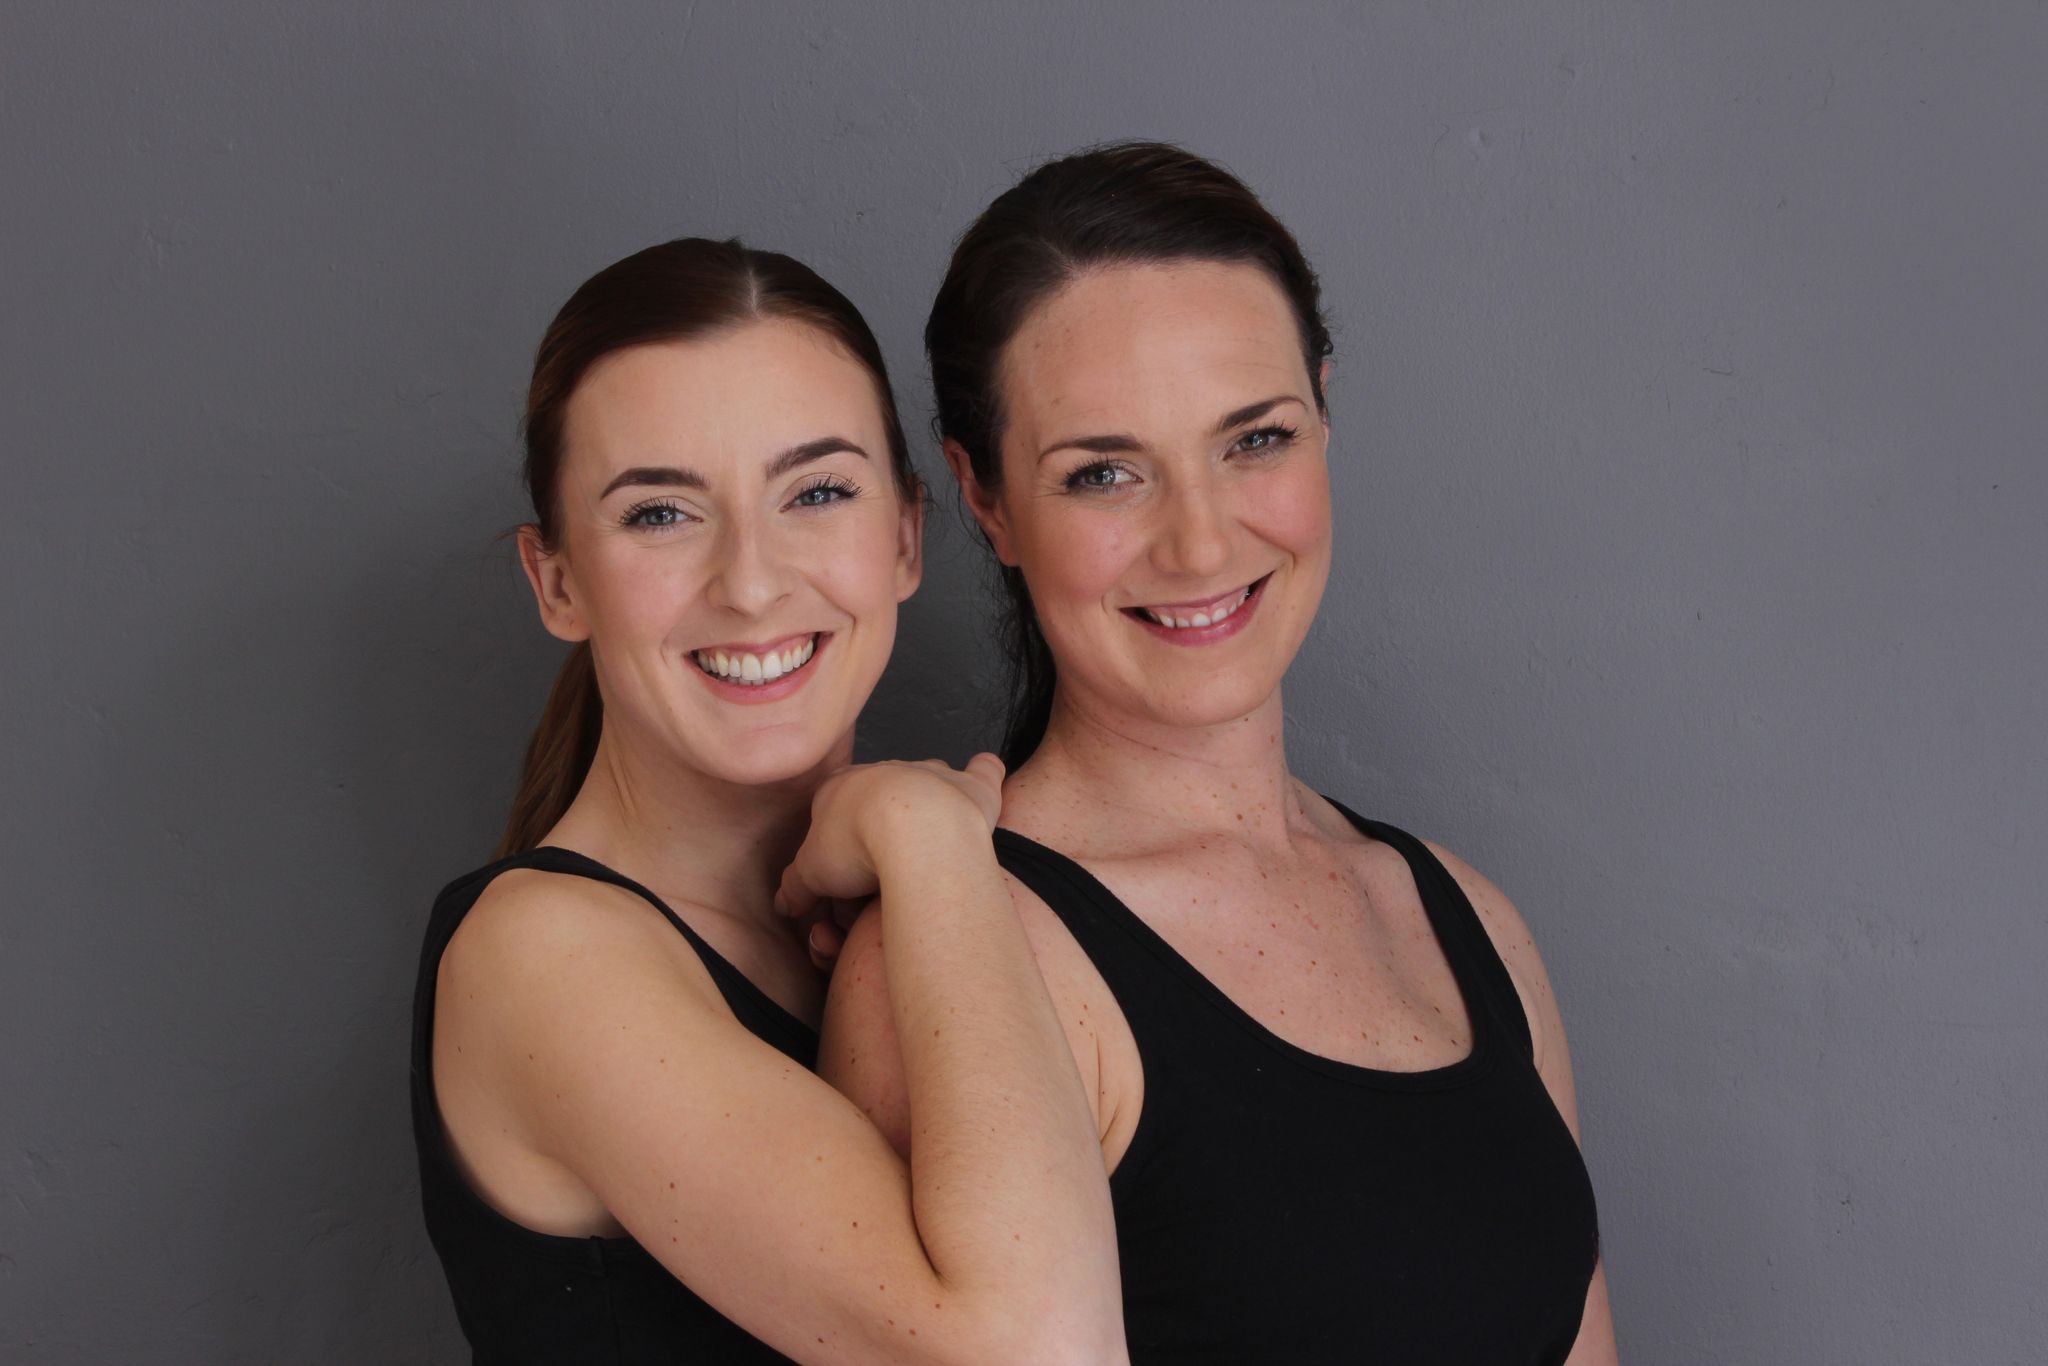 DBA School of Dance Ltd, owned by Rebekah Ryan and Jennifer Berrett, are opening a DBA School of Dance Ltd dance studio in the former Lloyds Bank building at 140 Cambridge Road in Churchtown